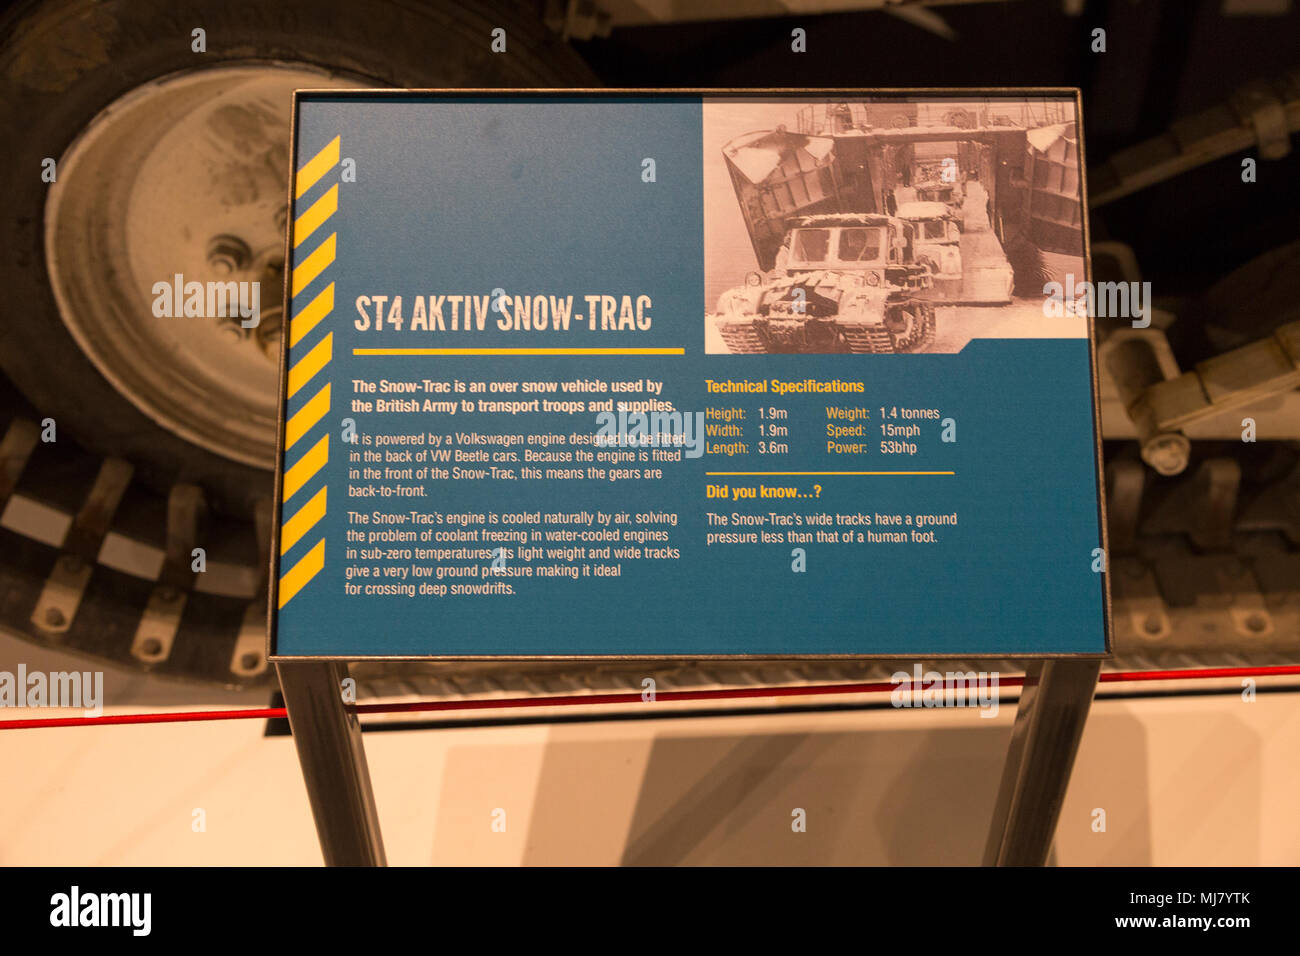 Information panel about ST4 AKTIV SNOW-TRAC vehicle, REME museum, MOD Lyneham, Wiltshire, England, UK Stock Photo